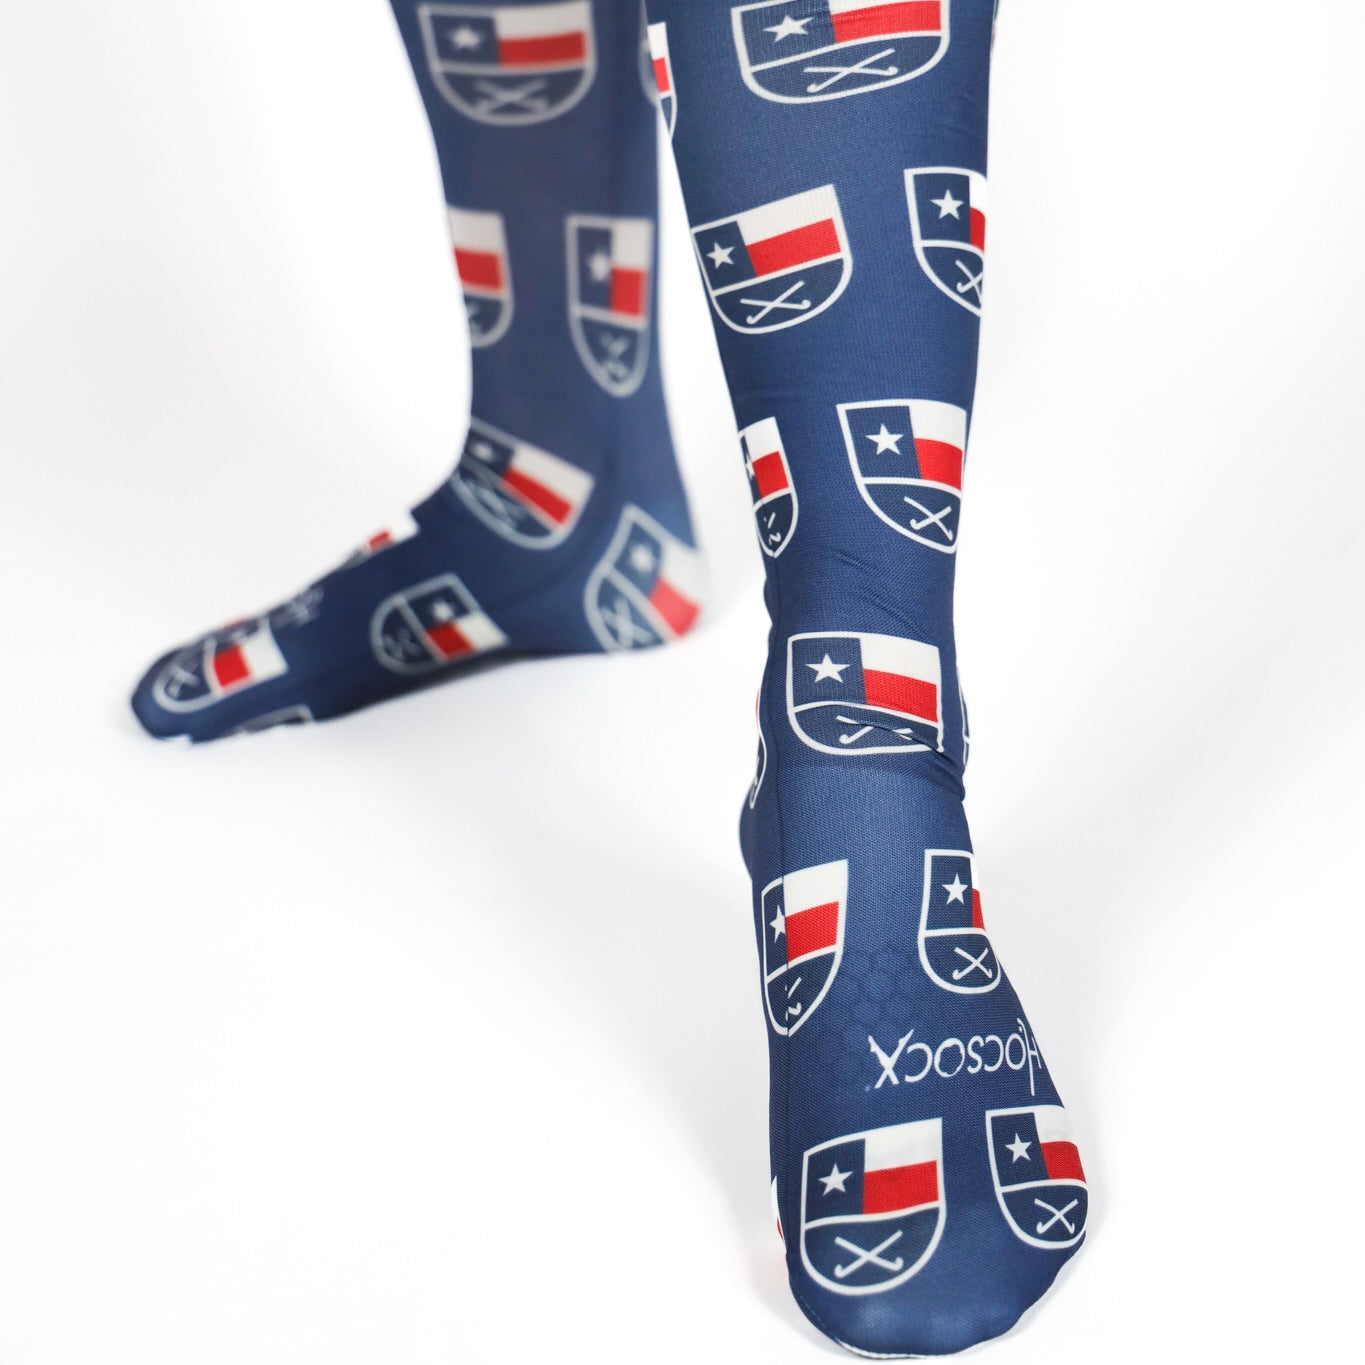 Hocsocx Blue Field Hockey Sticks Socks Medium